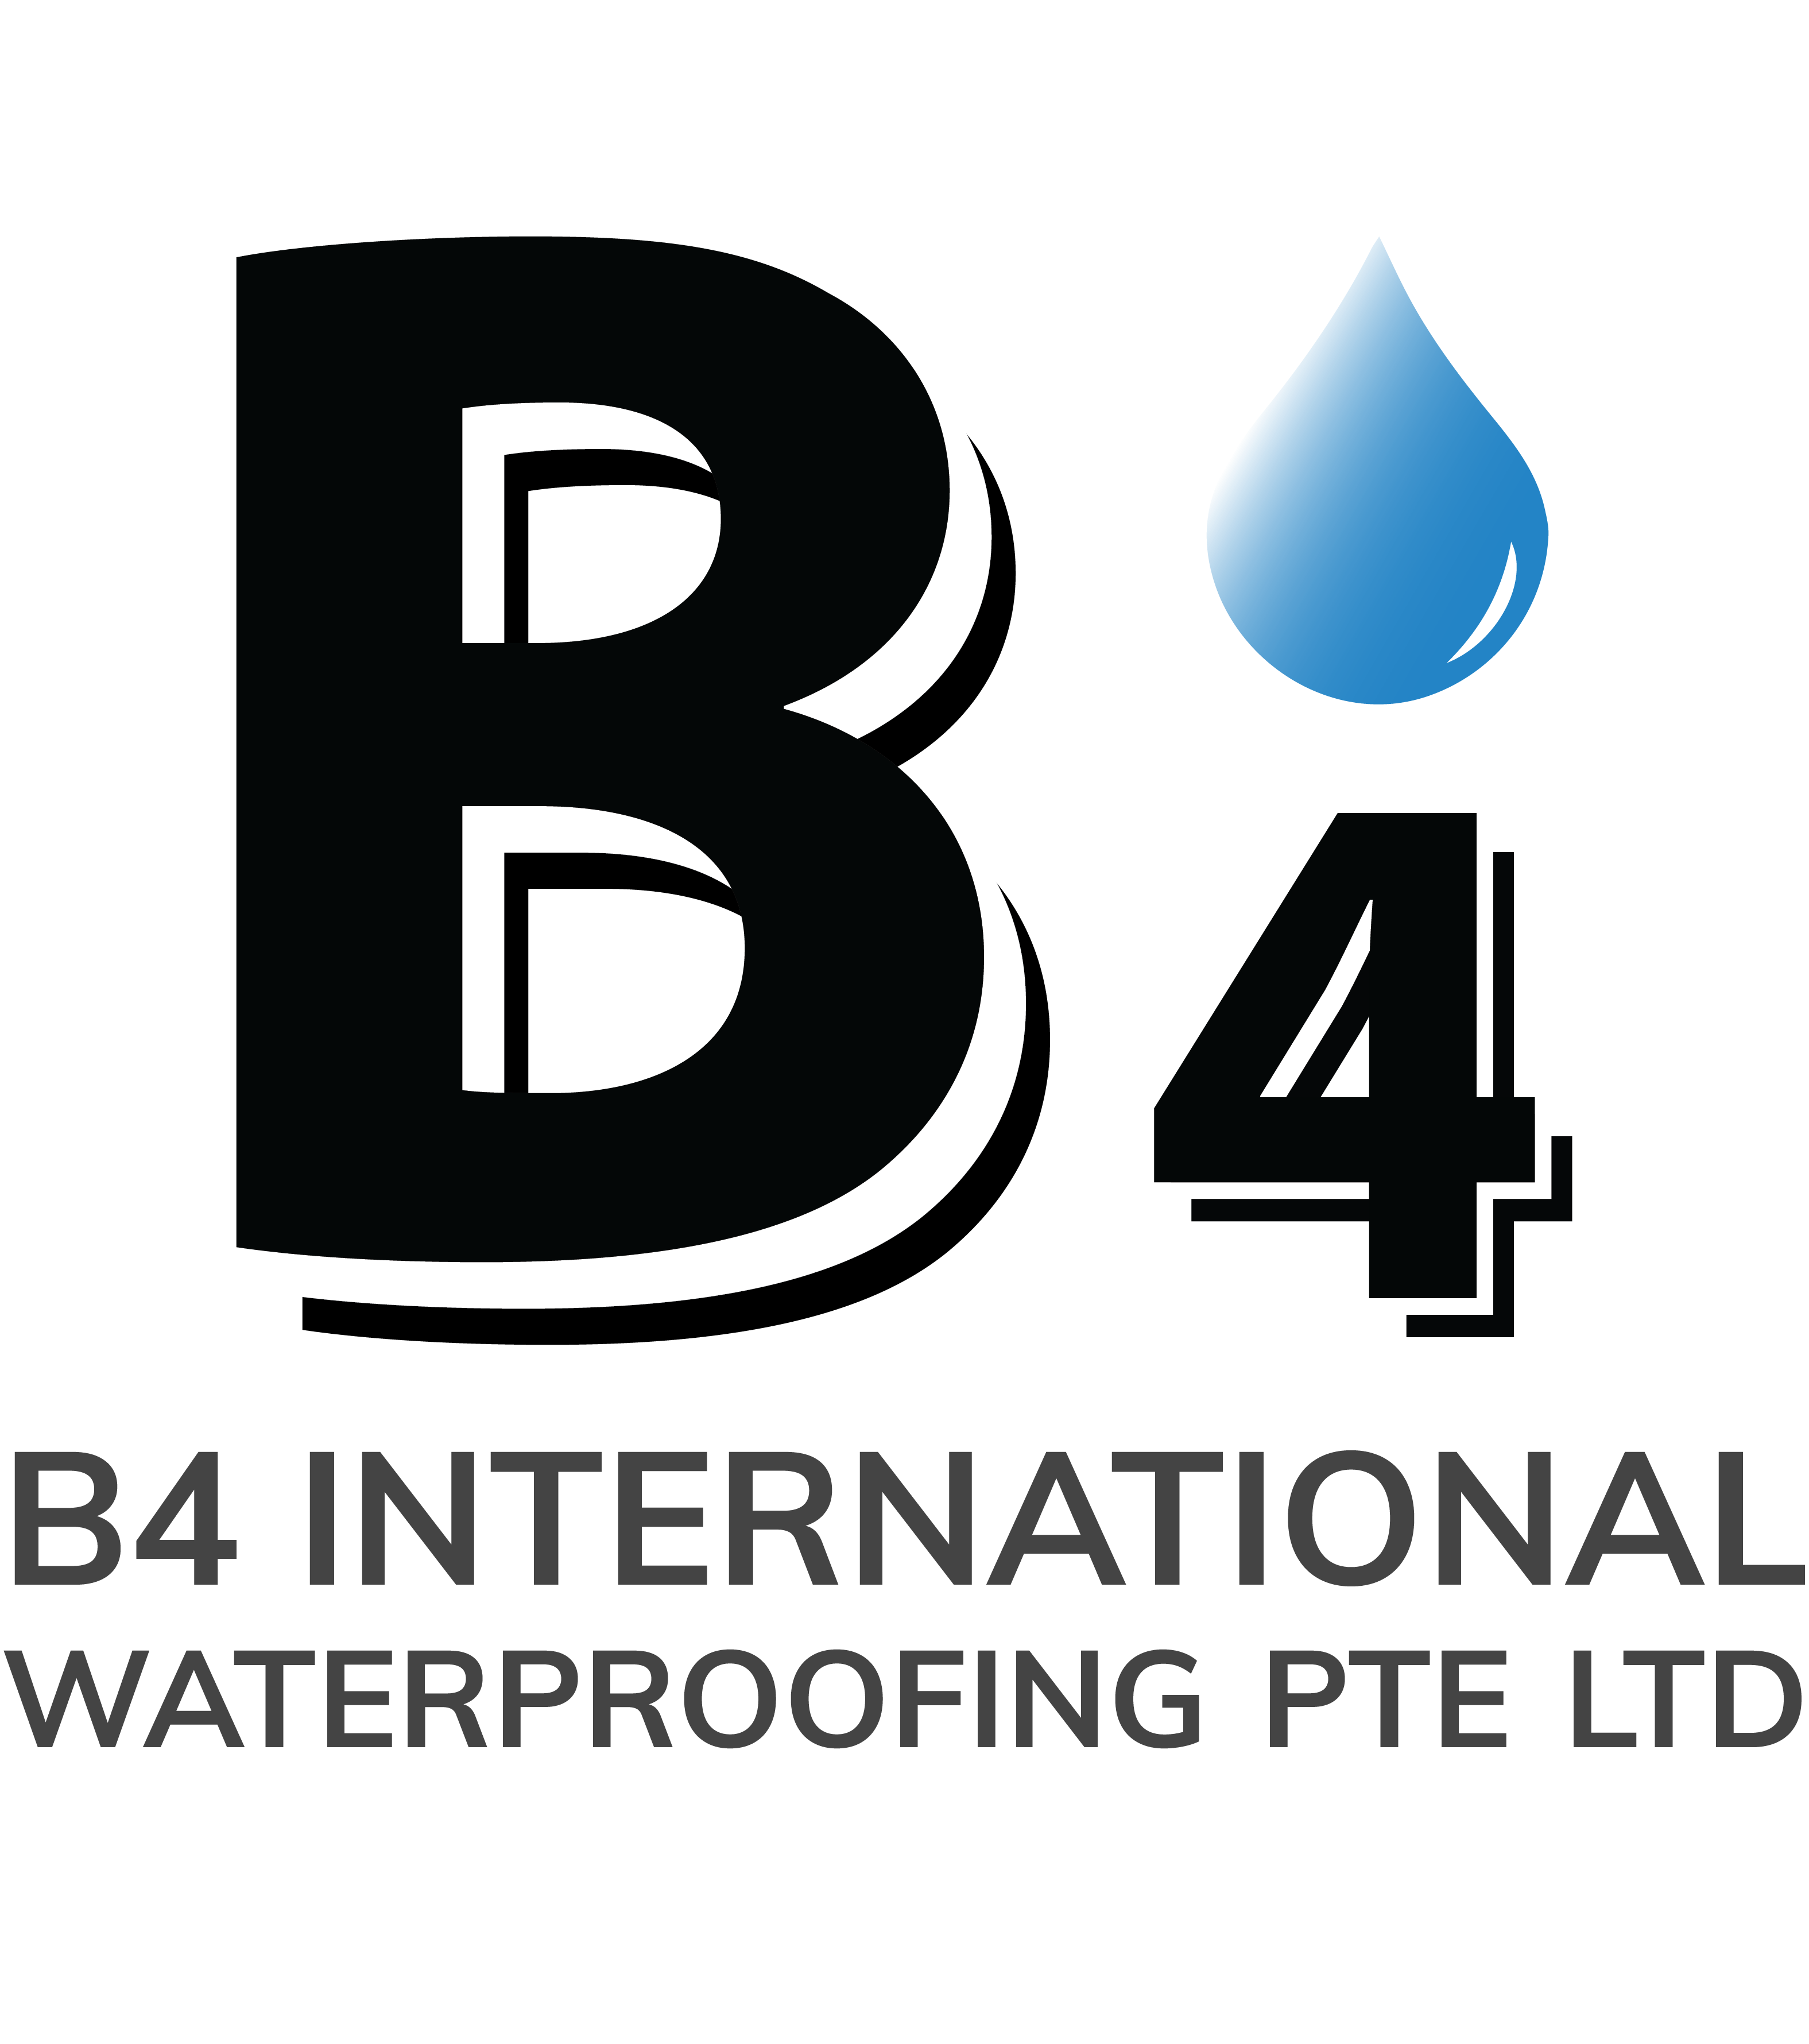 B4 International Waterproofing Pte Ltd